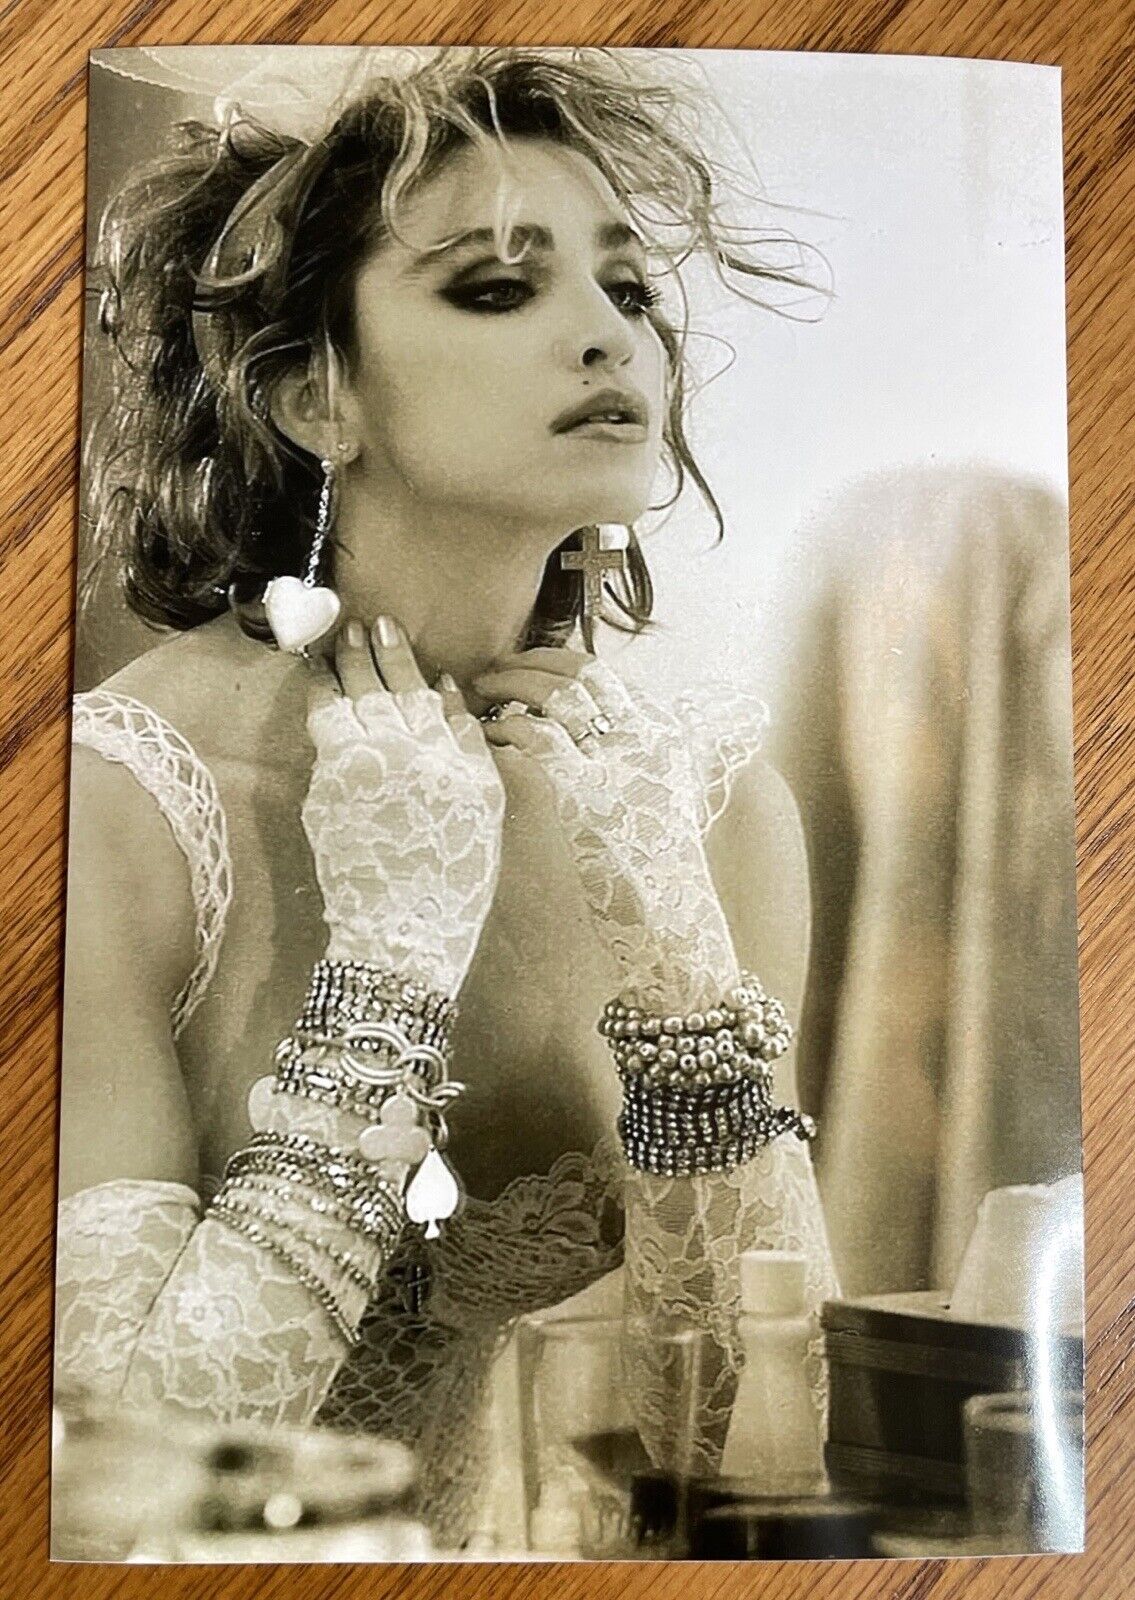 Madonna "1980s Music Icon" Like A Virgin 4x6 Bw Glossy Photo, Beautiful! ( New )